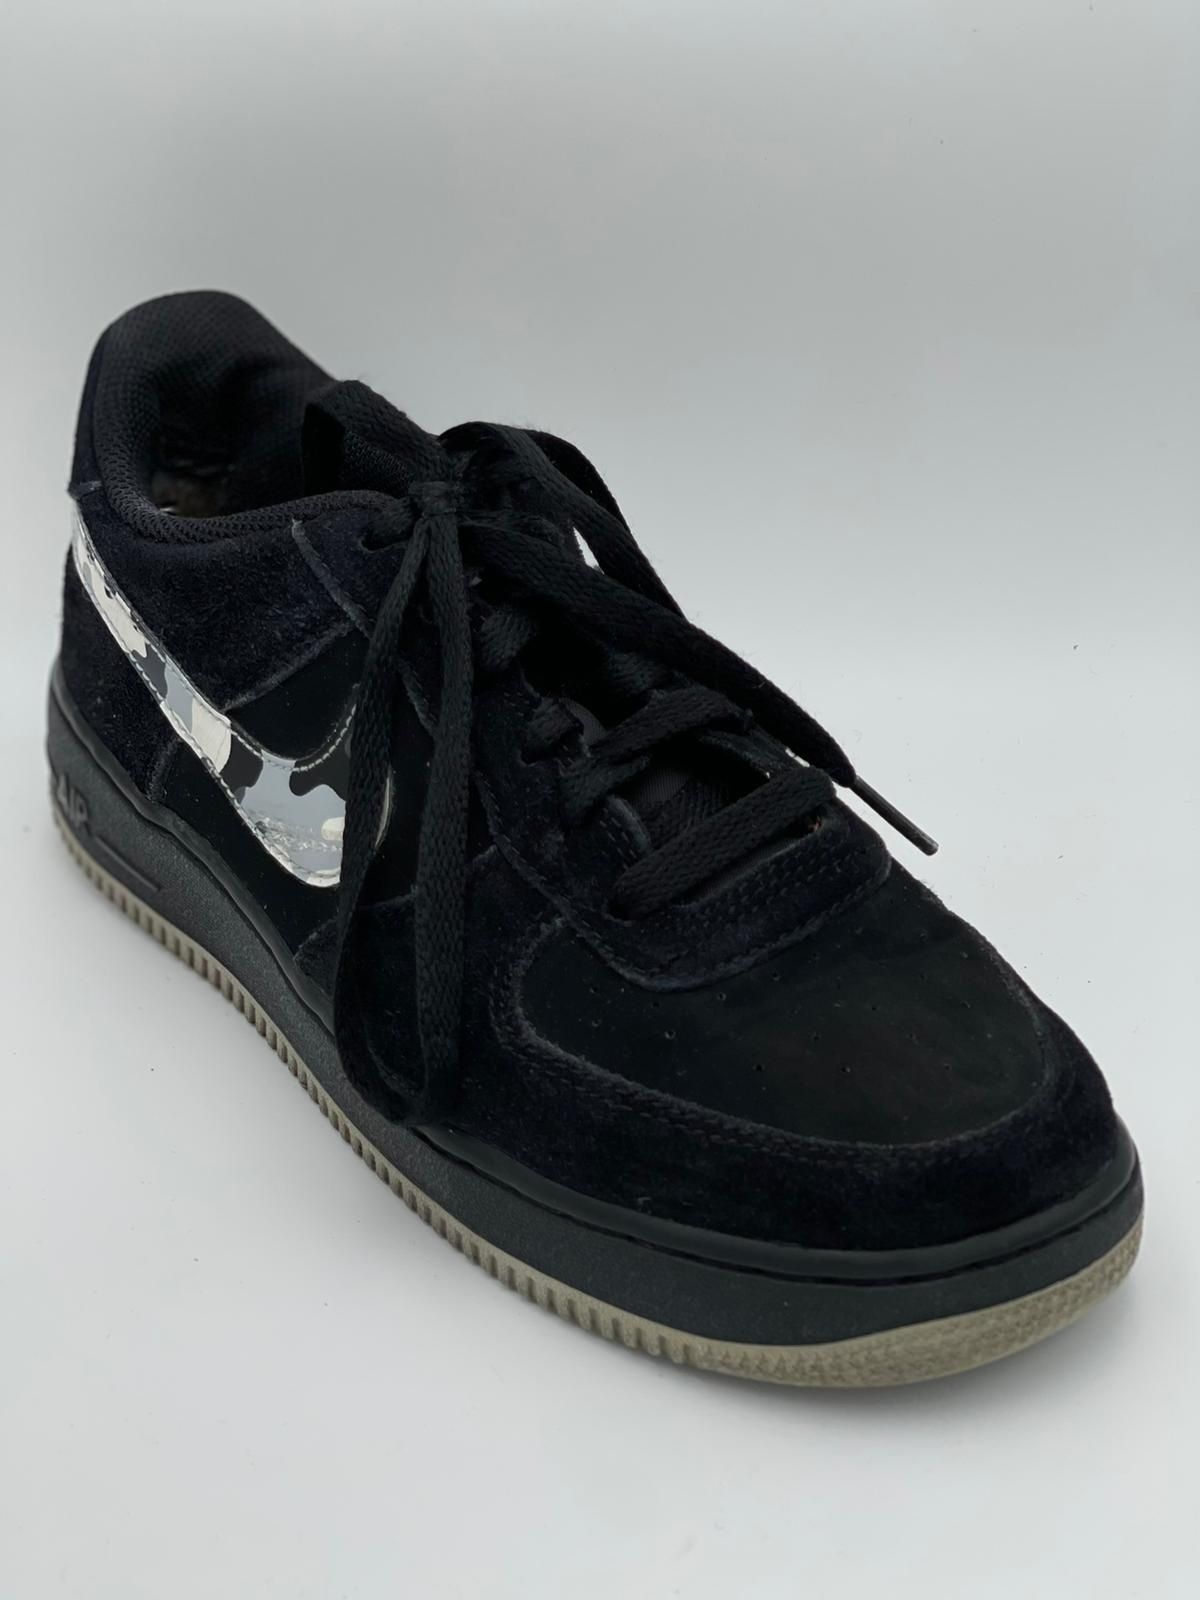 Nike air force 1 low black camo